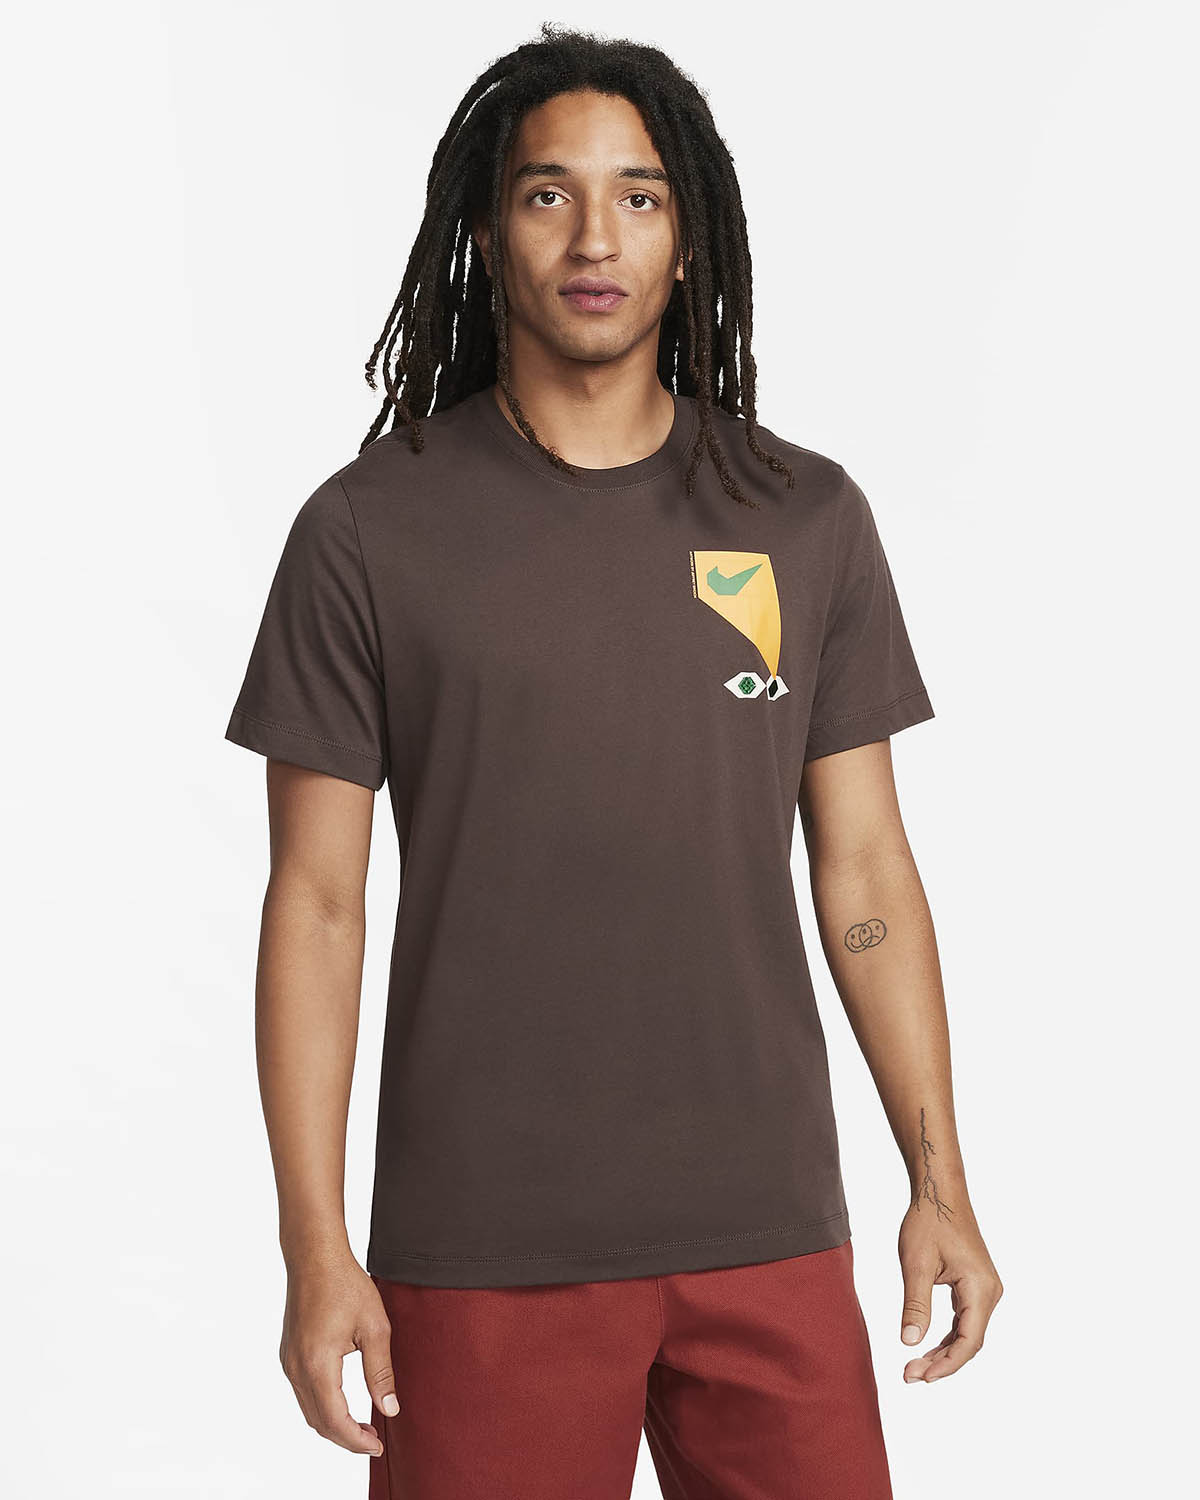 Nike Sportswear T Shirt Baroque Brown 1